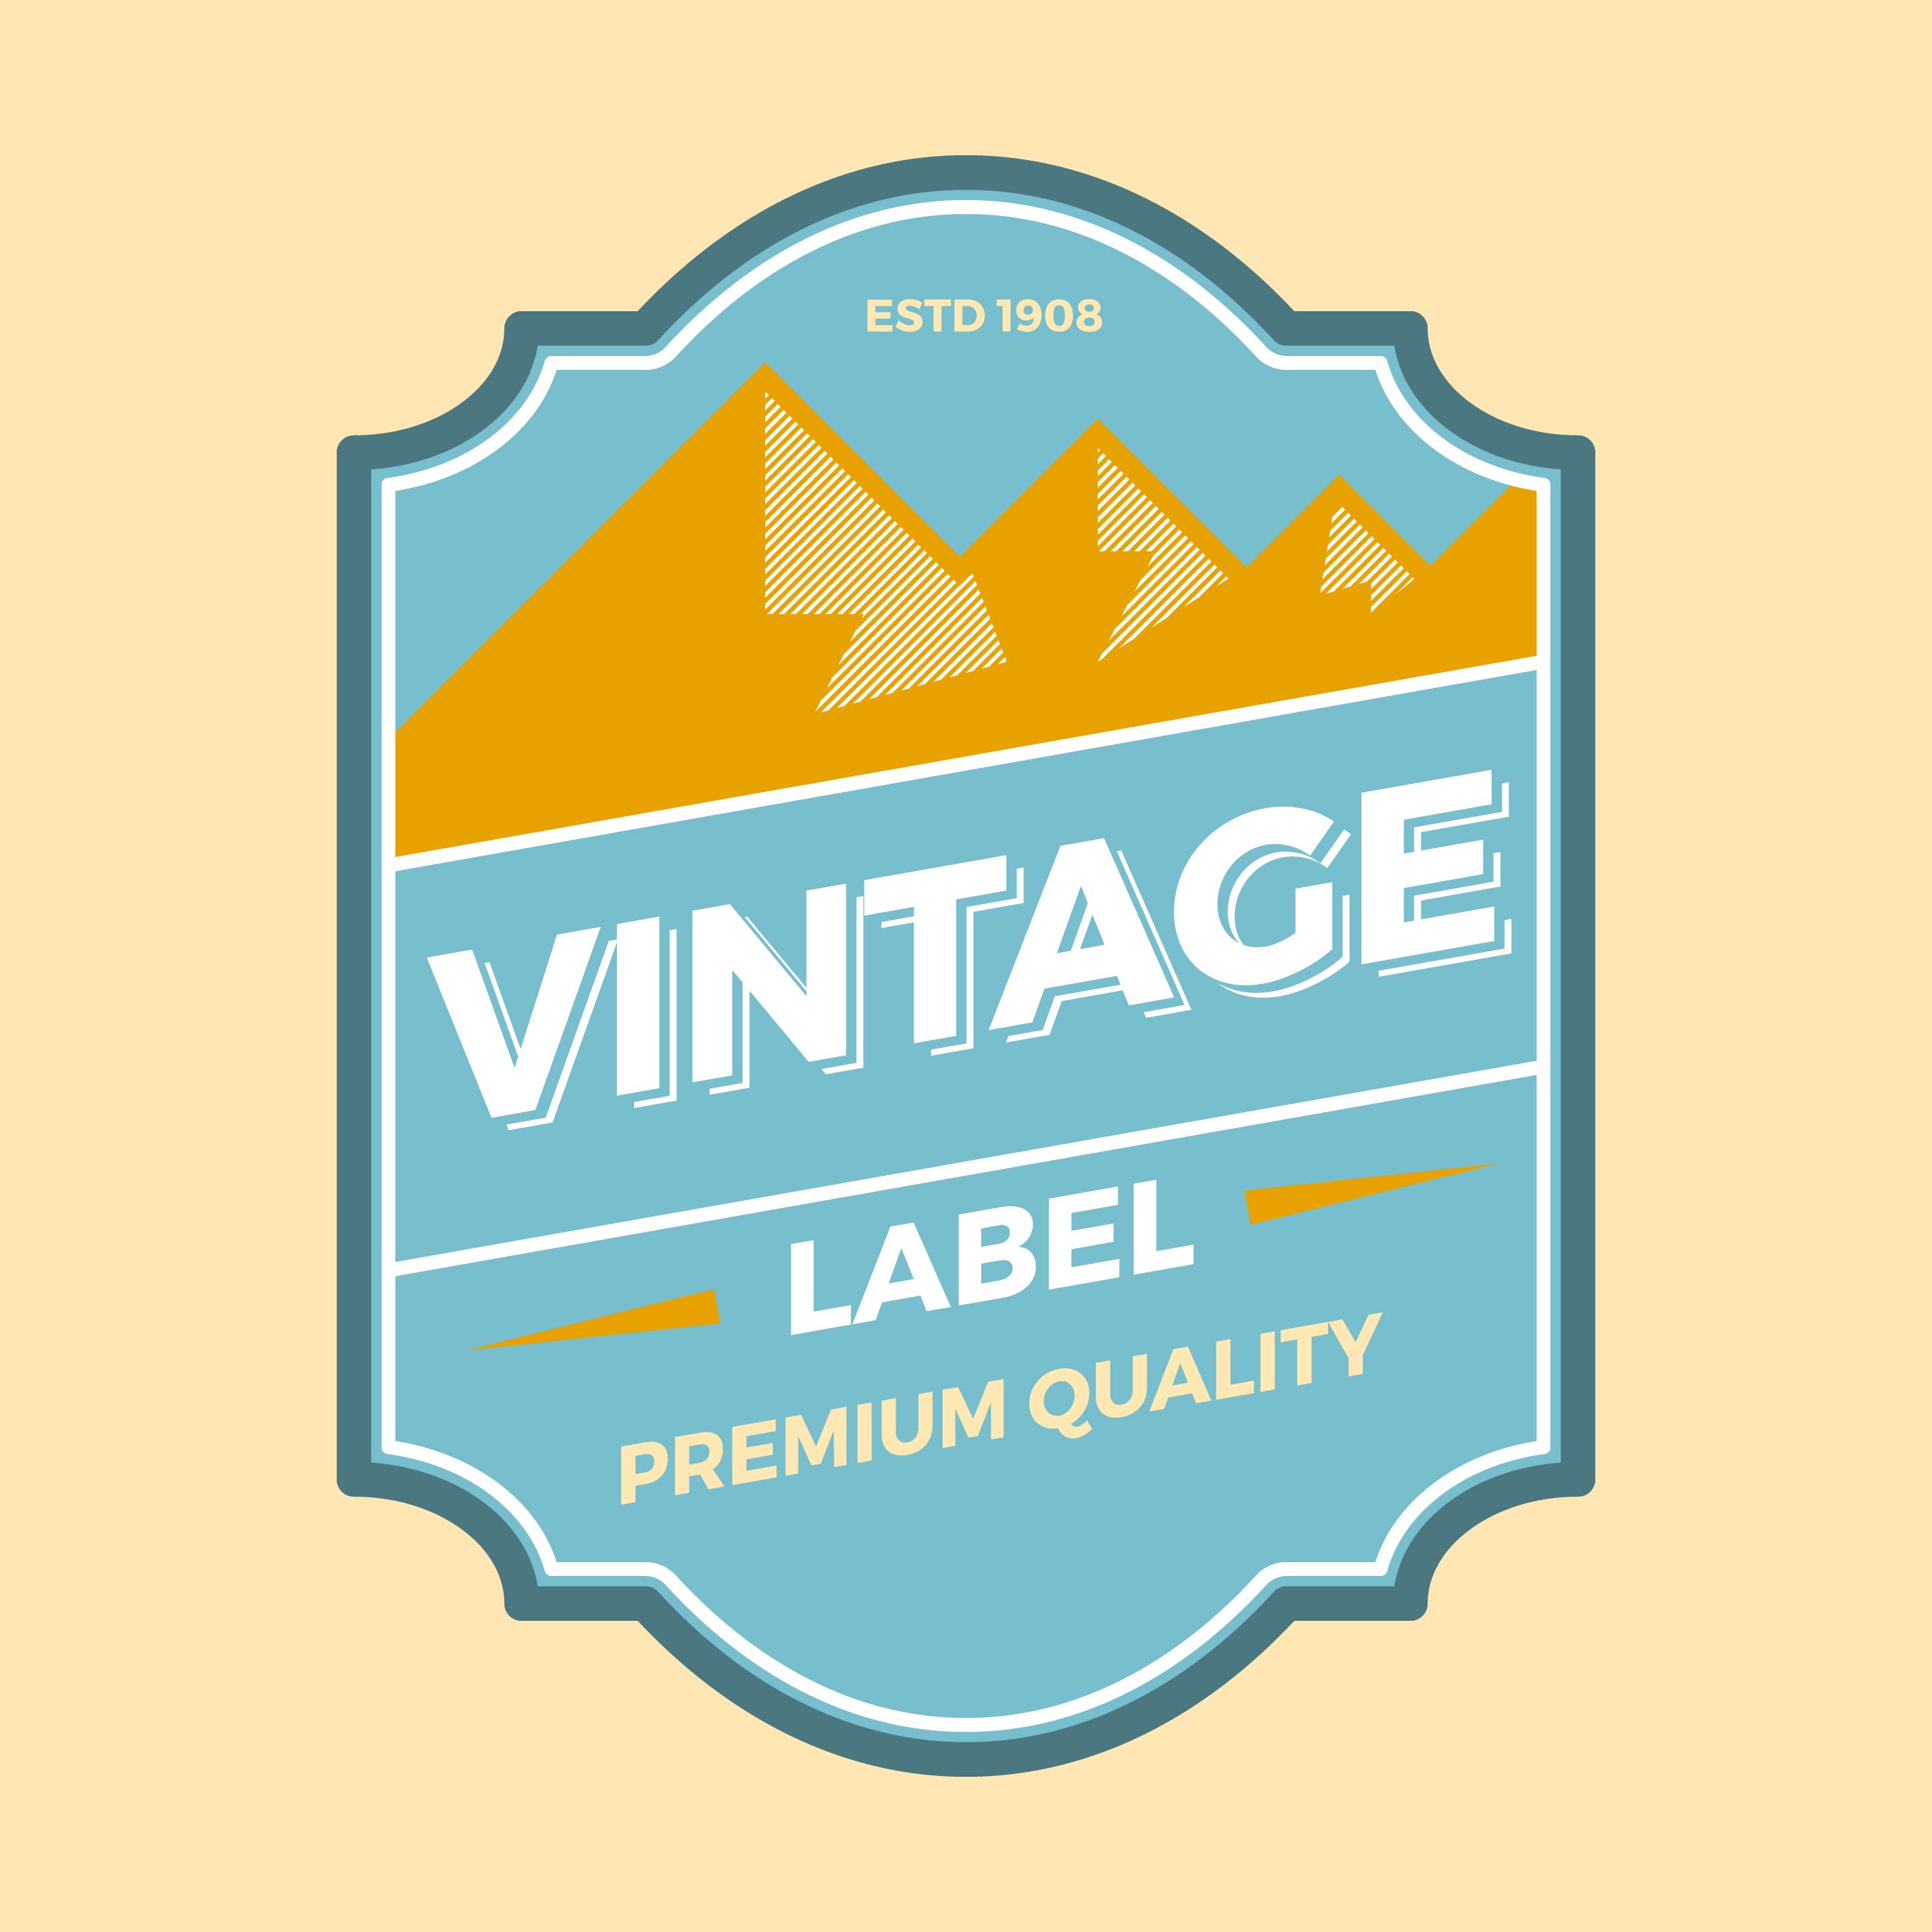 Download Flat Vintage Label Vector - Download Free Vectors, Clipart Graphics & Vector Art